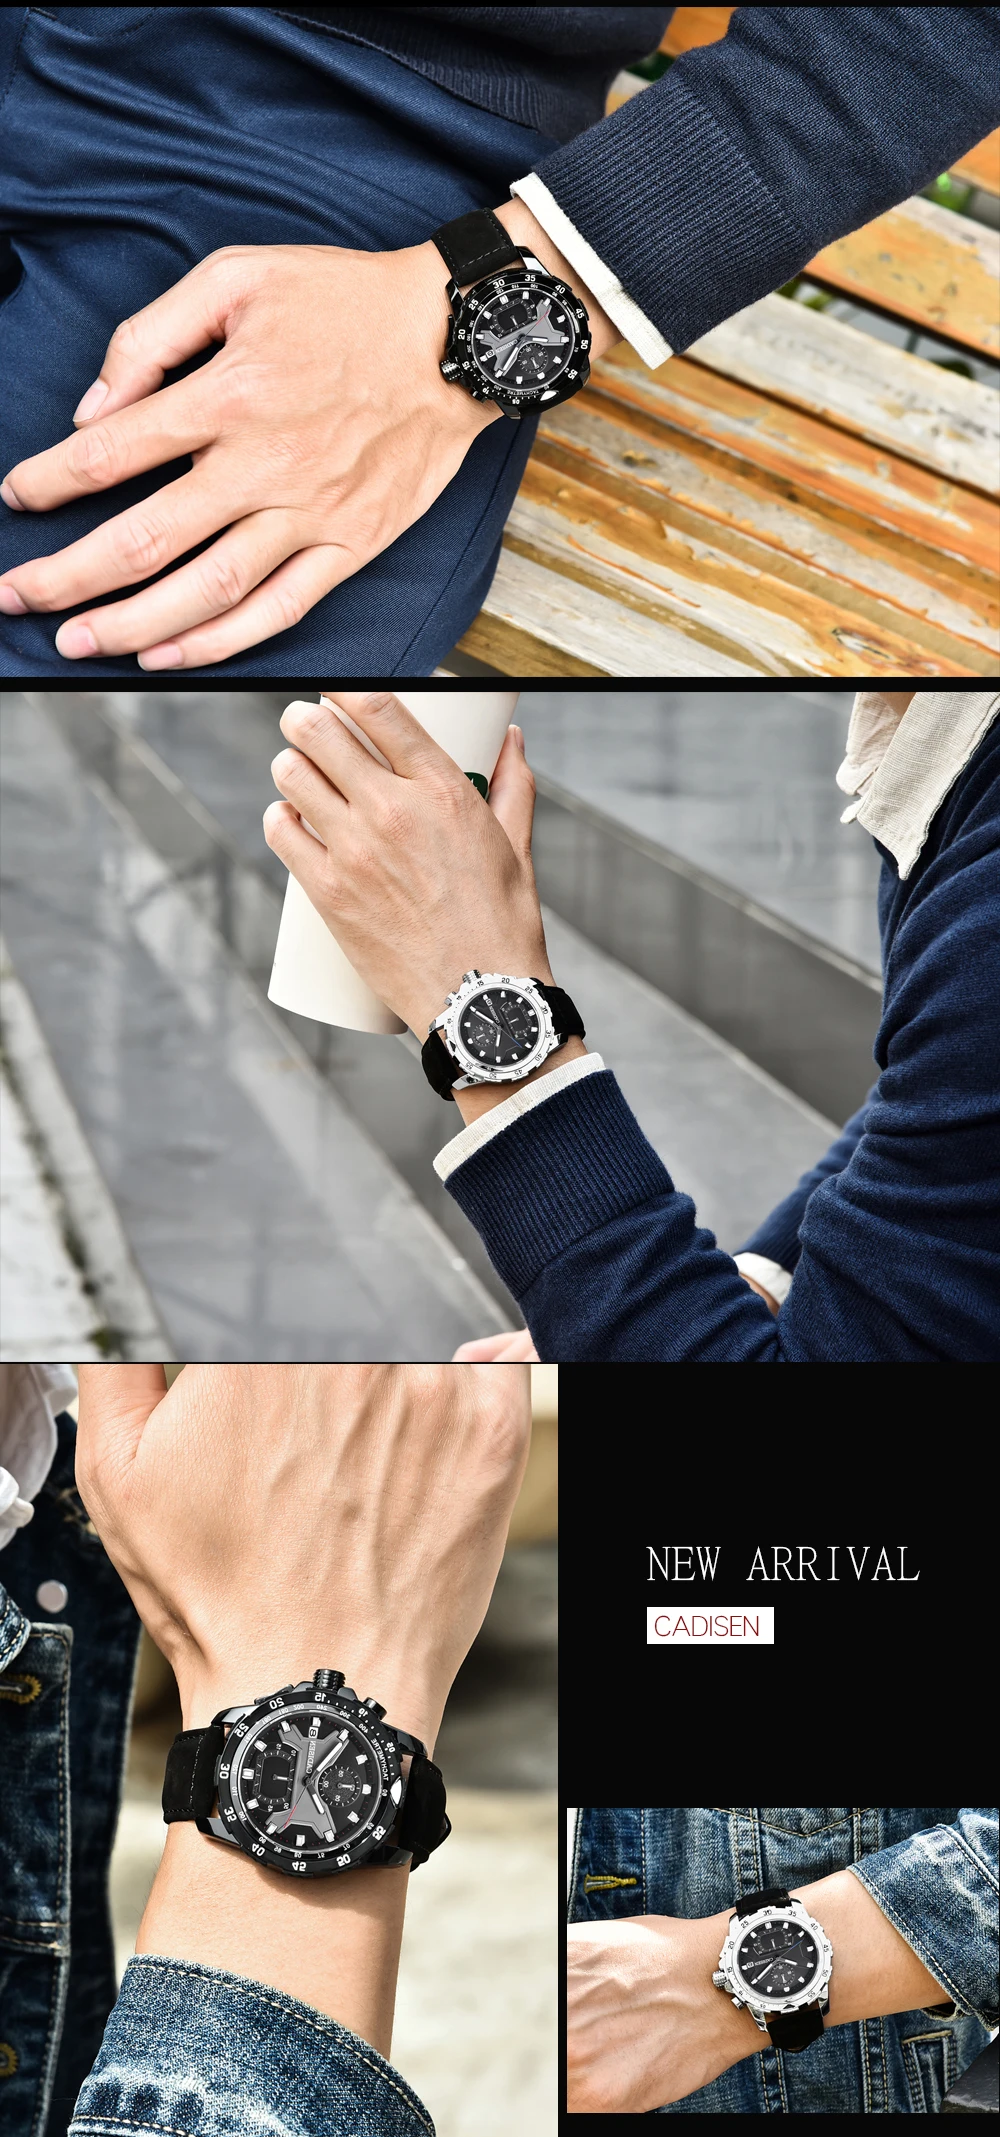 2018 новый бренд Для мужчин кварцевые часы Leatehr Водонепроницаемый аналоговые часы Для мужчин s Дата Повседневное часы Рим время Relogio Masculino